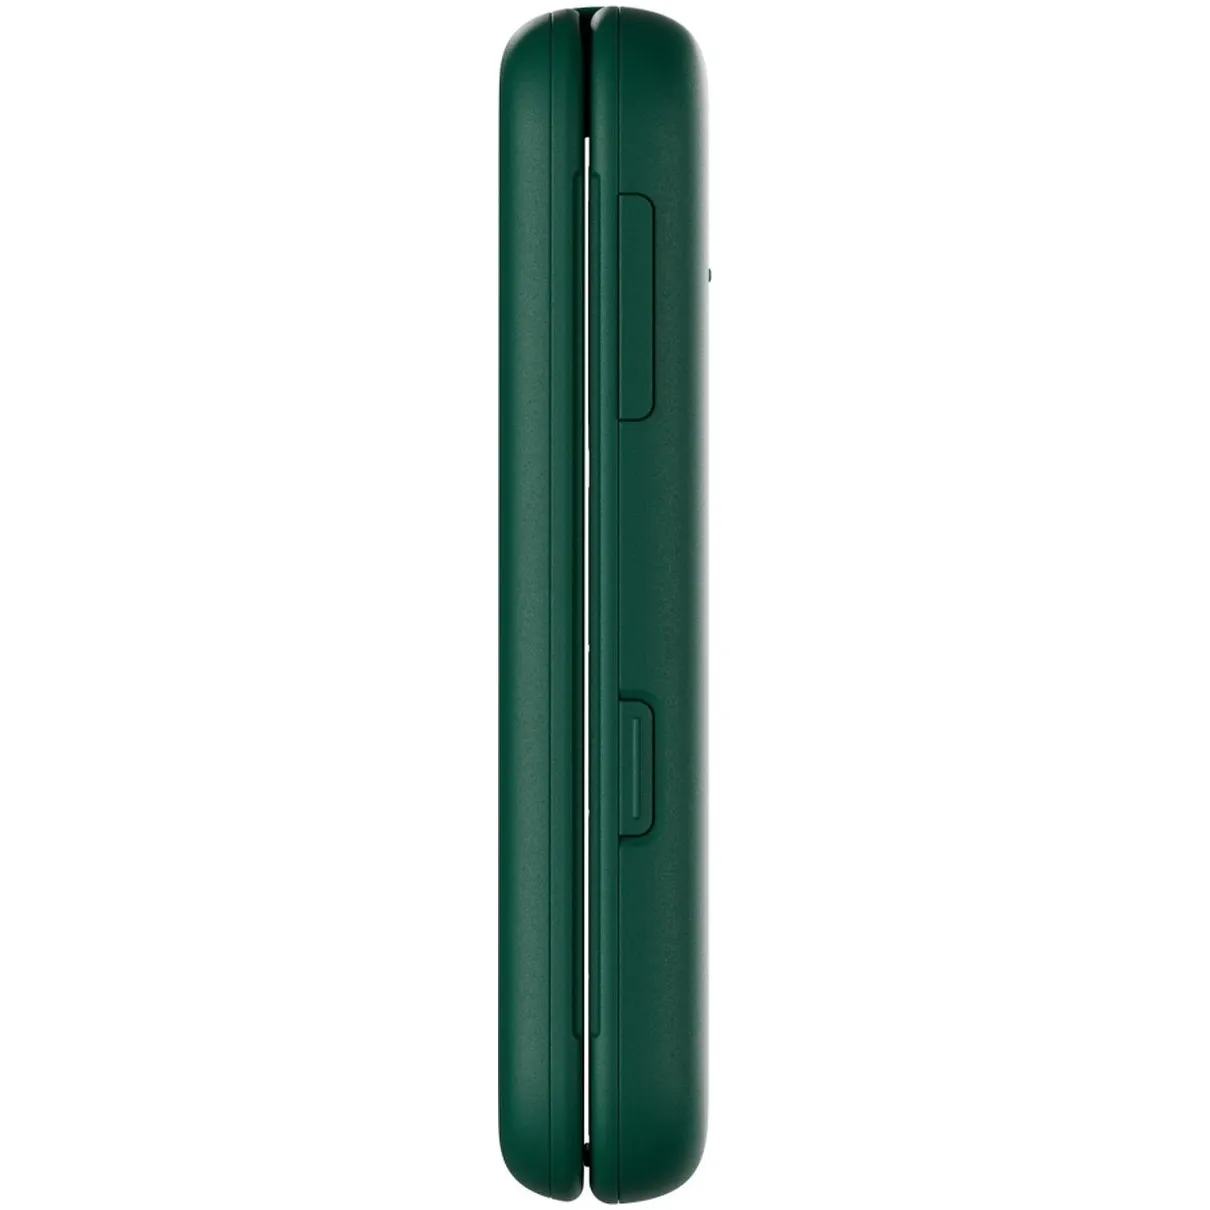 Nokia 2660 Flip Groen